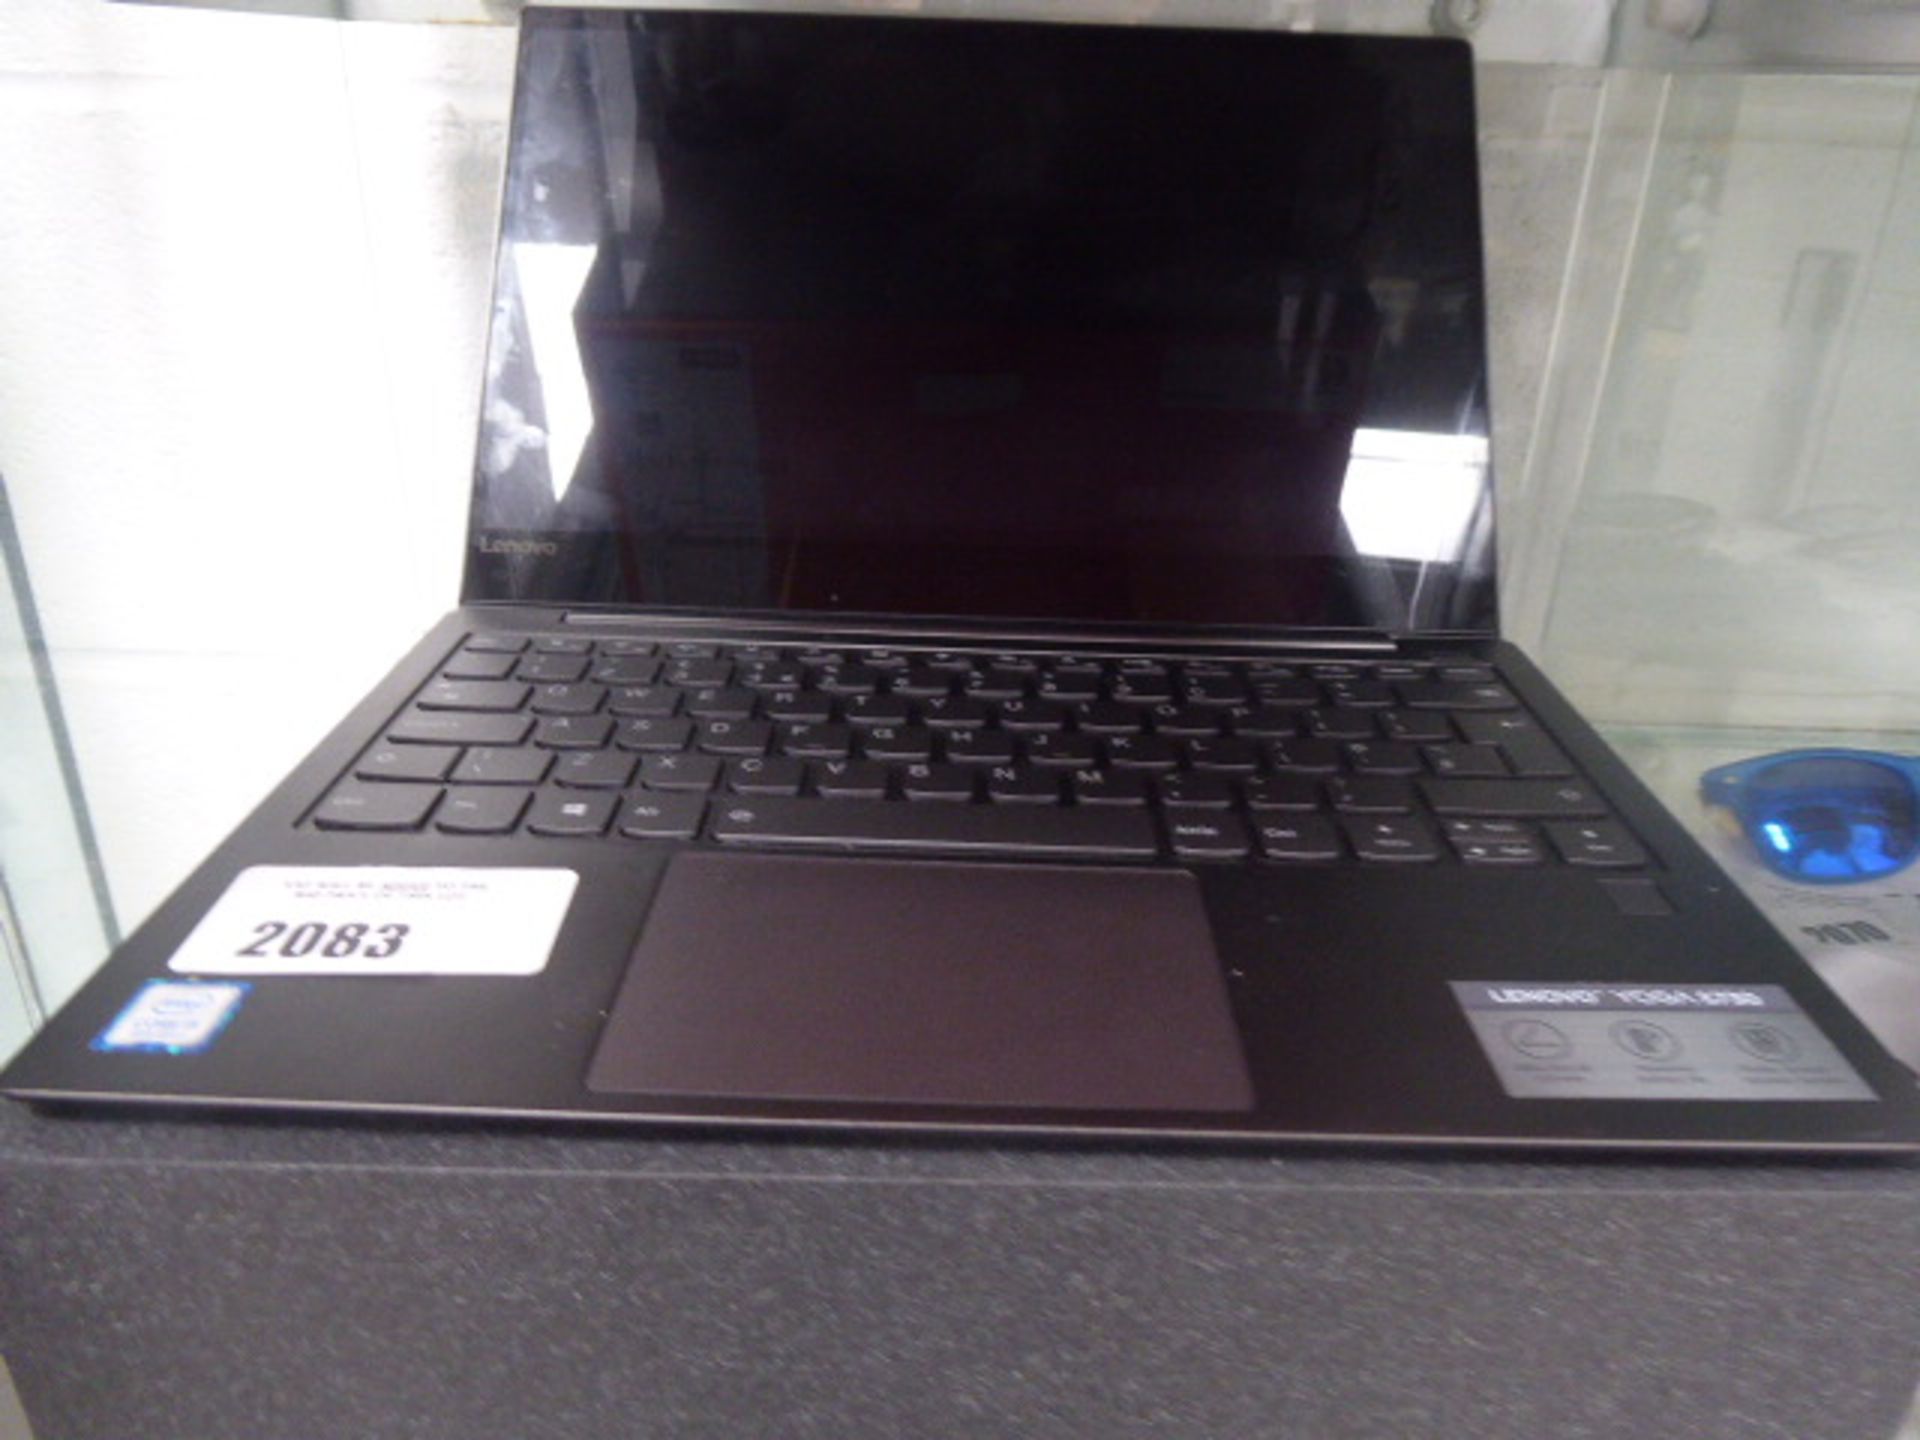 Lenovo Yoga S730 laptop core i5 8th gen processor, 8gb ram, 256gb storage, Windows 10 installed,